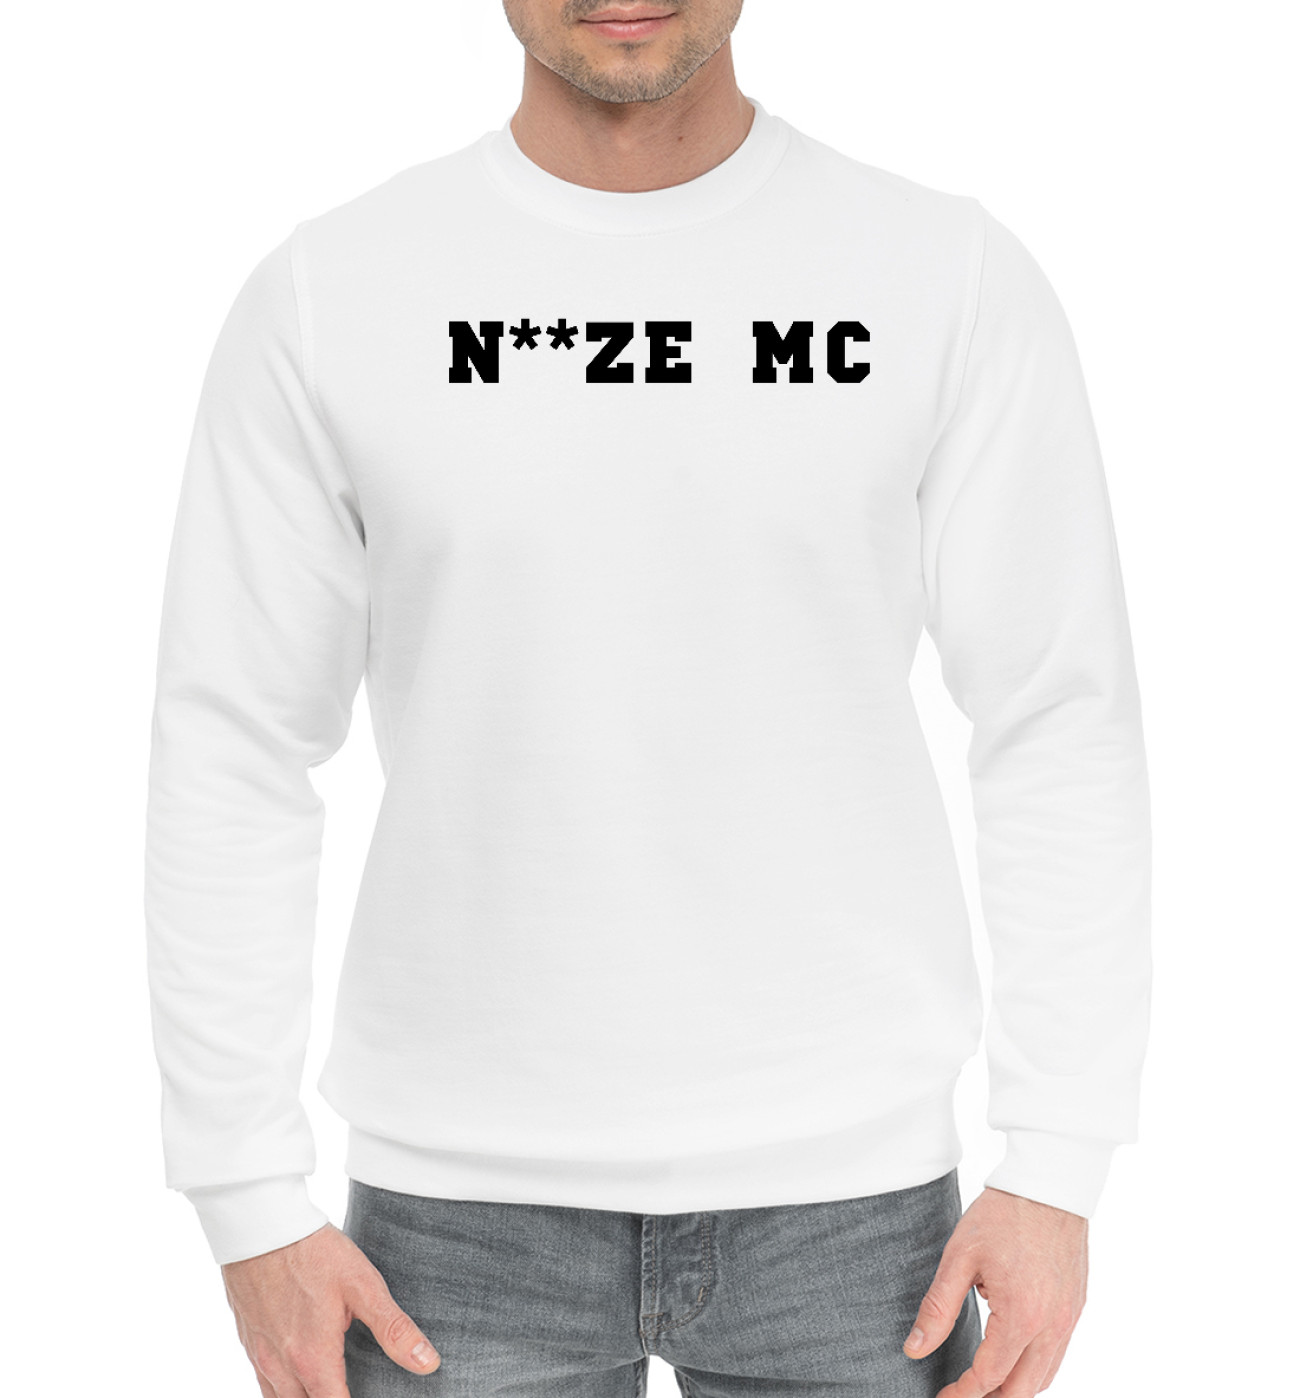 Мужской Хлопковый свитшот Noize MC, артикул: NMC-394370-hsw-2